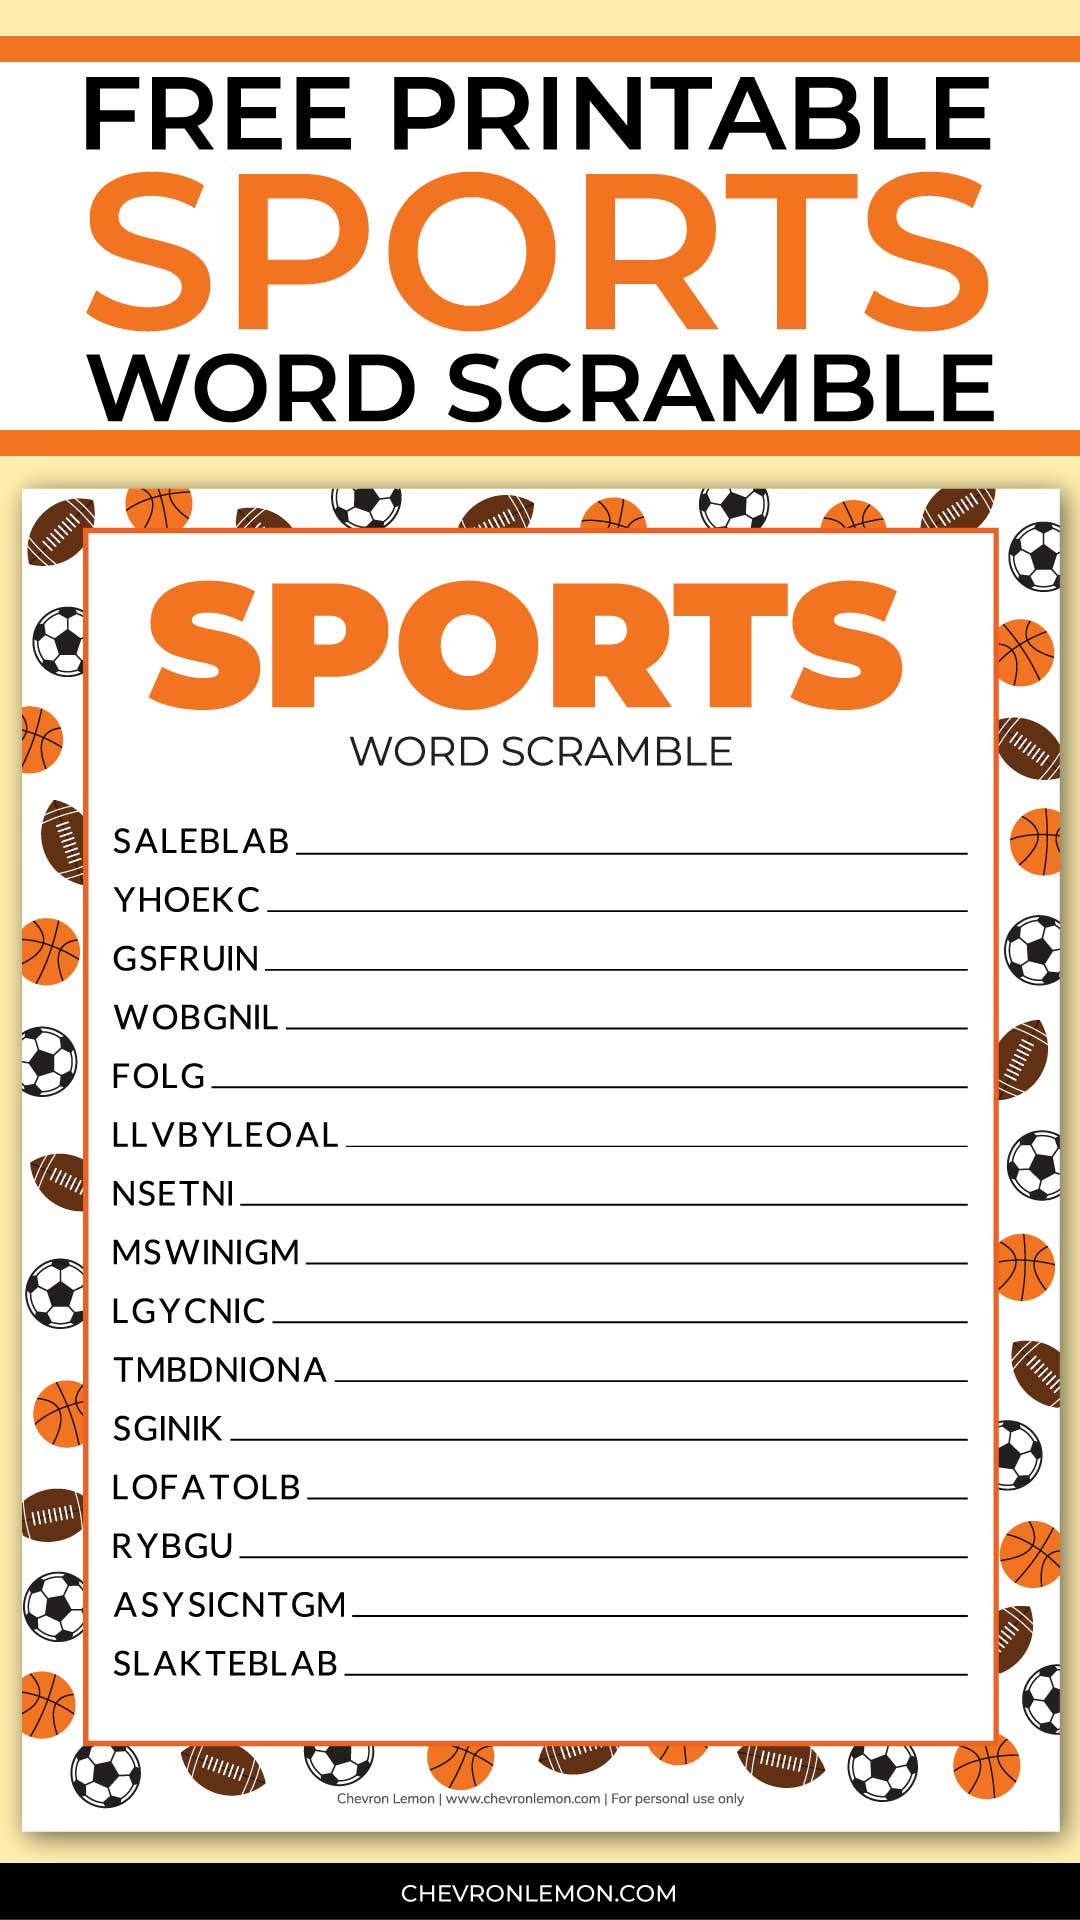 Sports word scramble